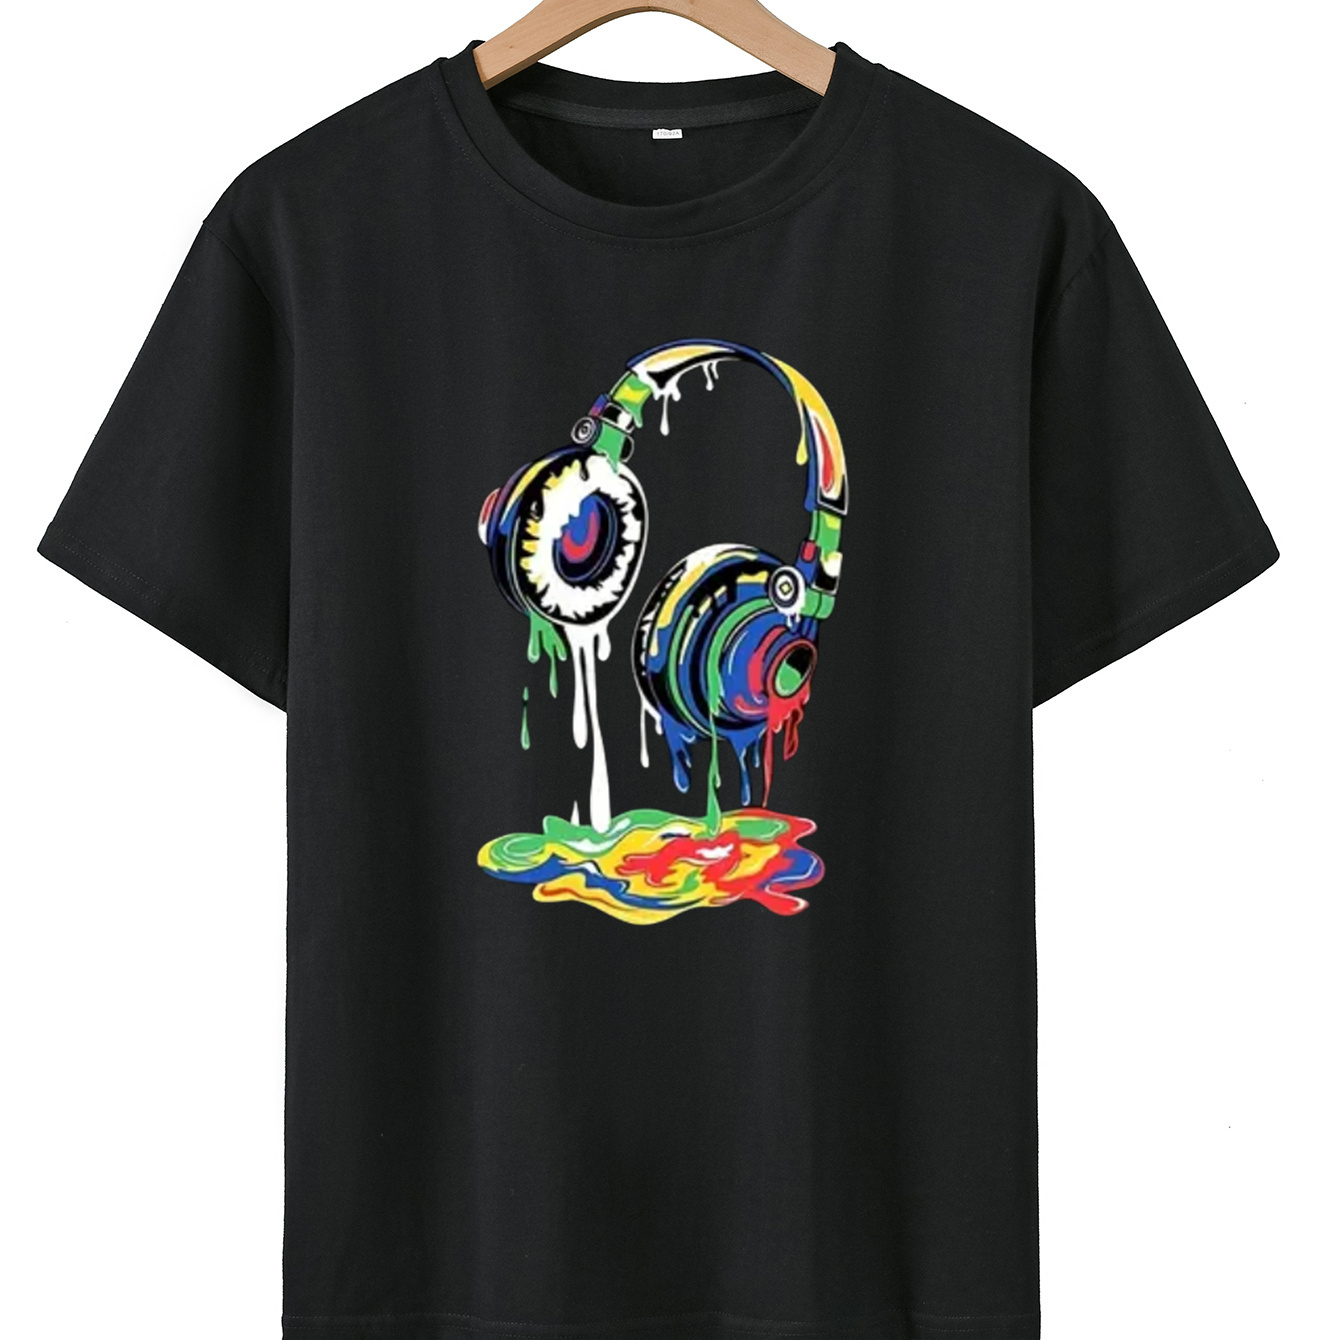 

Melting Headphone Graffiti Print T-shirt For Boys, Short Sleeve Casual Top, Summer Outdoor Daily Wear